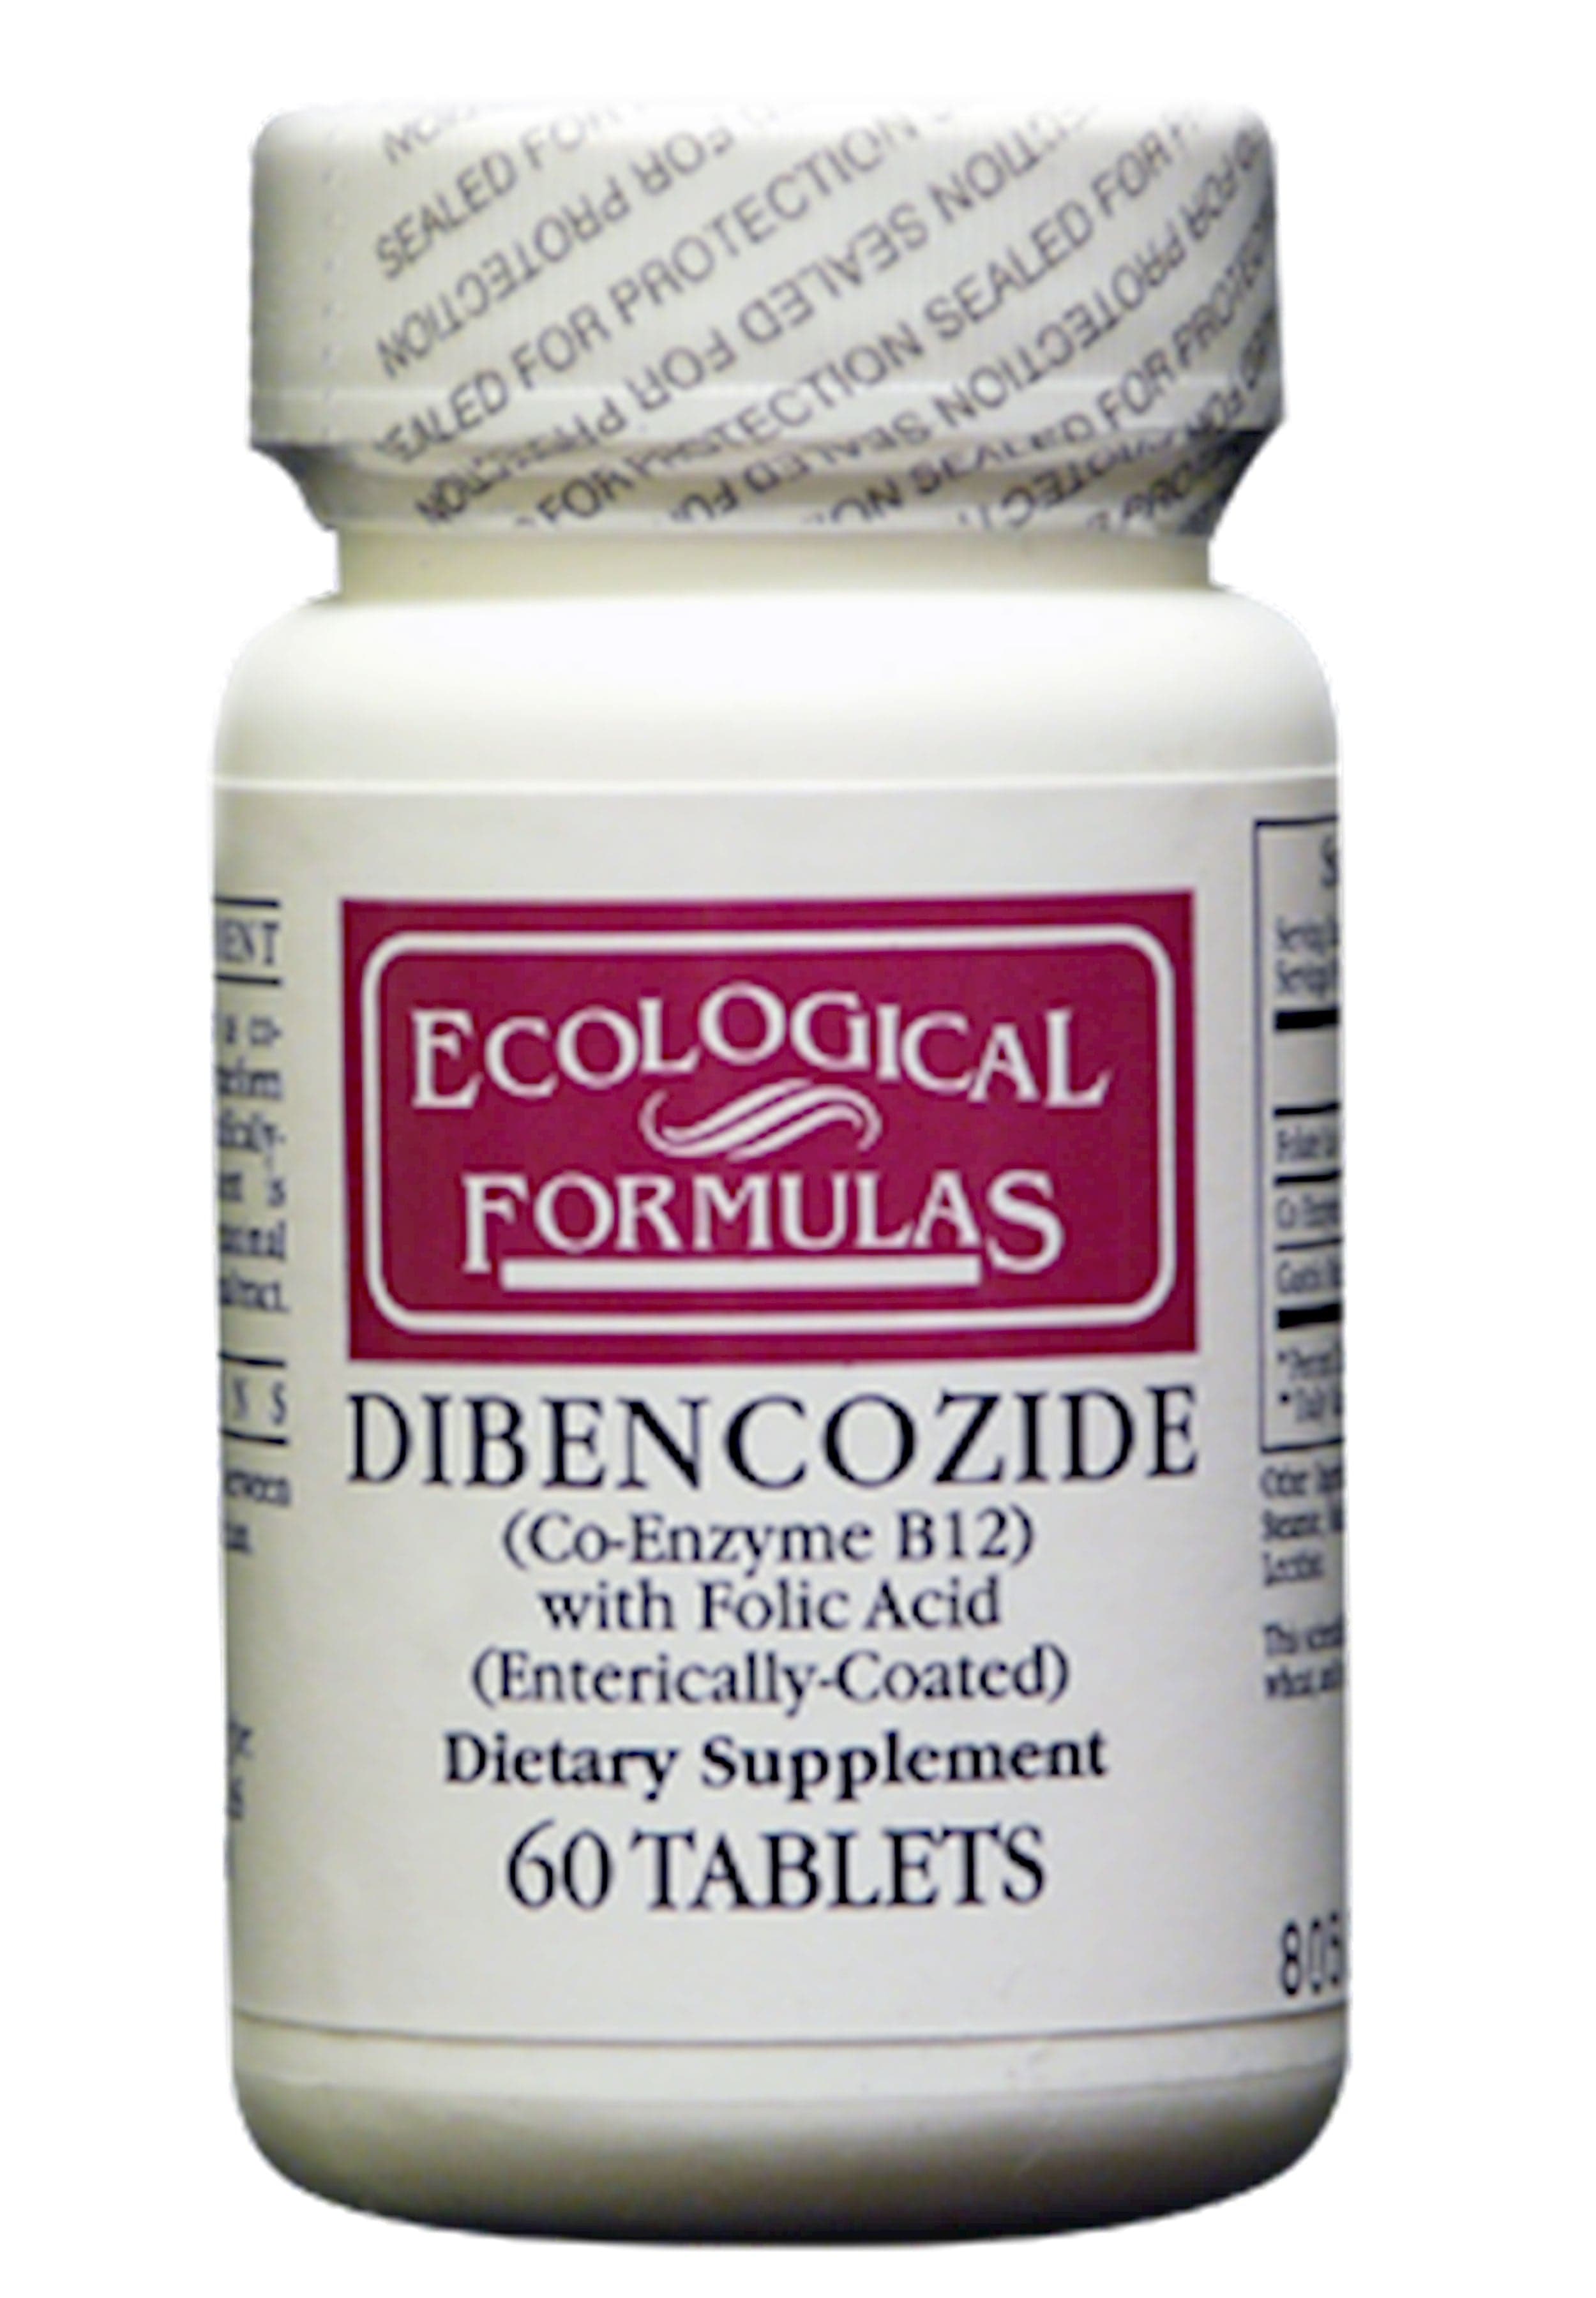 Ecological Formulas/Cardiovascular Research Dibencozide (Co-Enzyme B12 with Folic Acid)